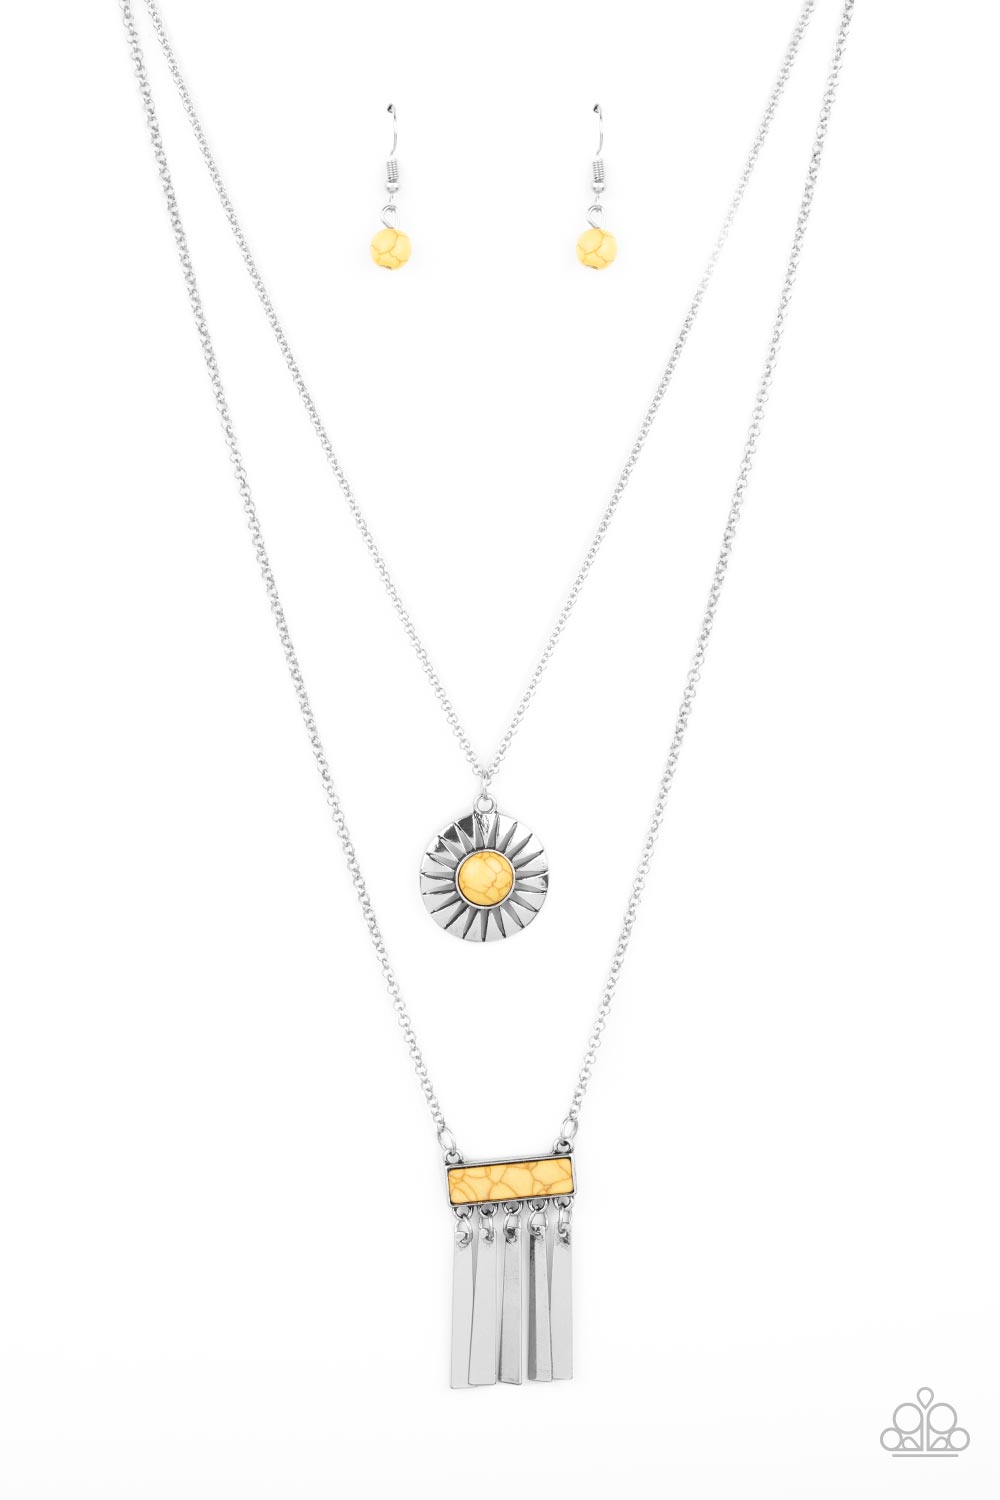 Sunburst Rustica - yellow - Paparazzi necklace